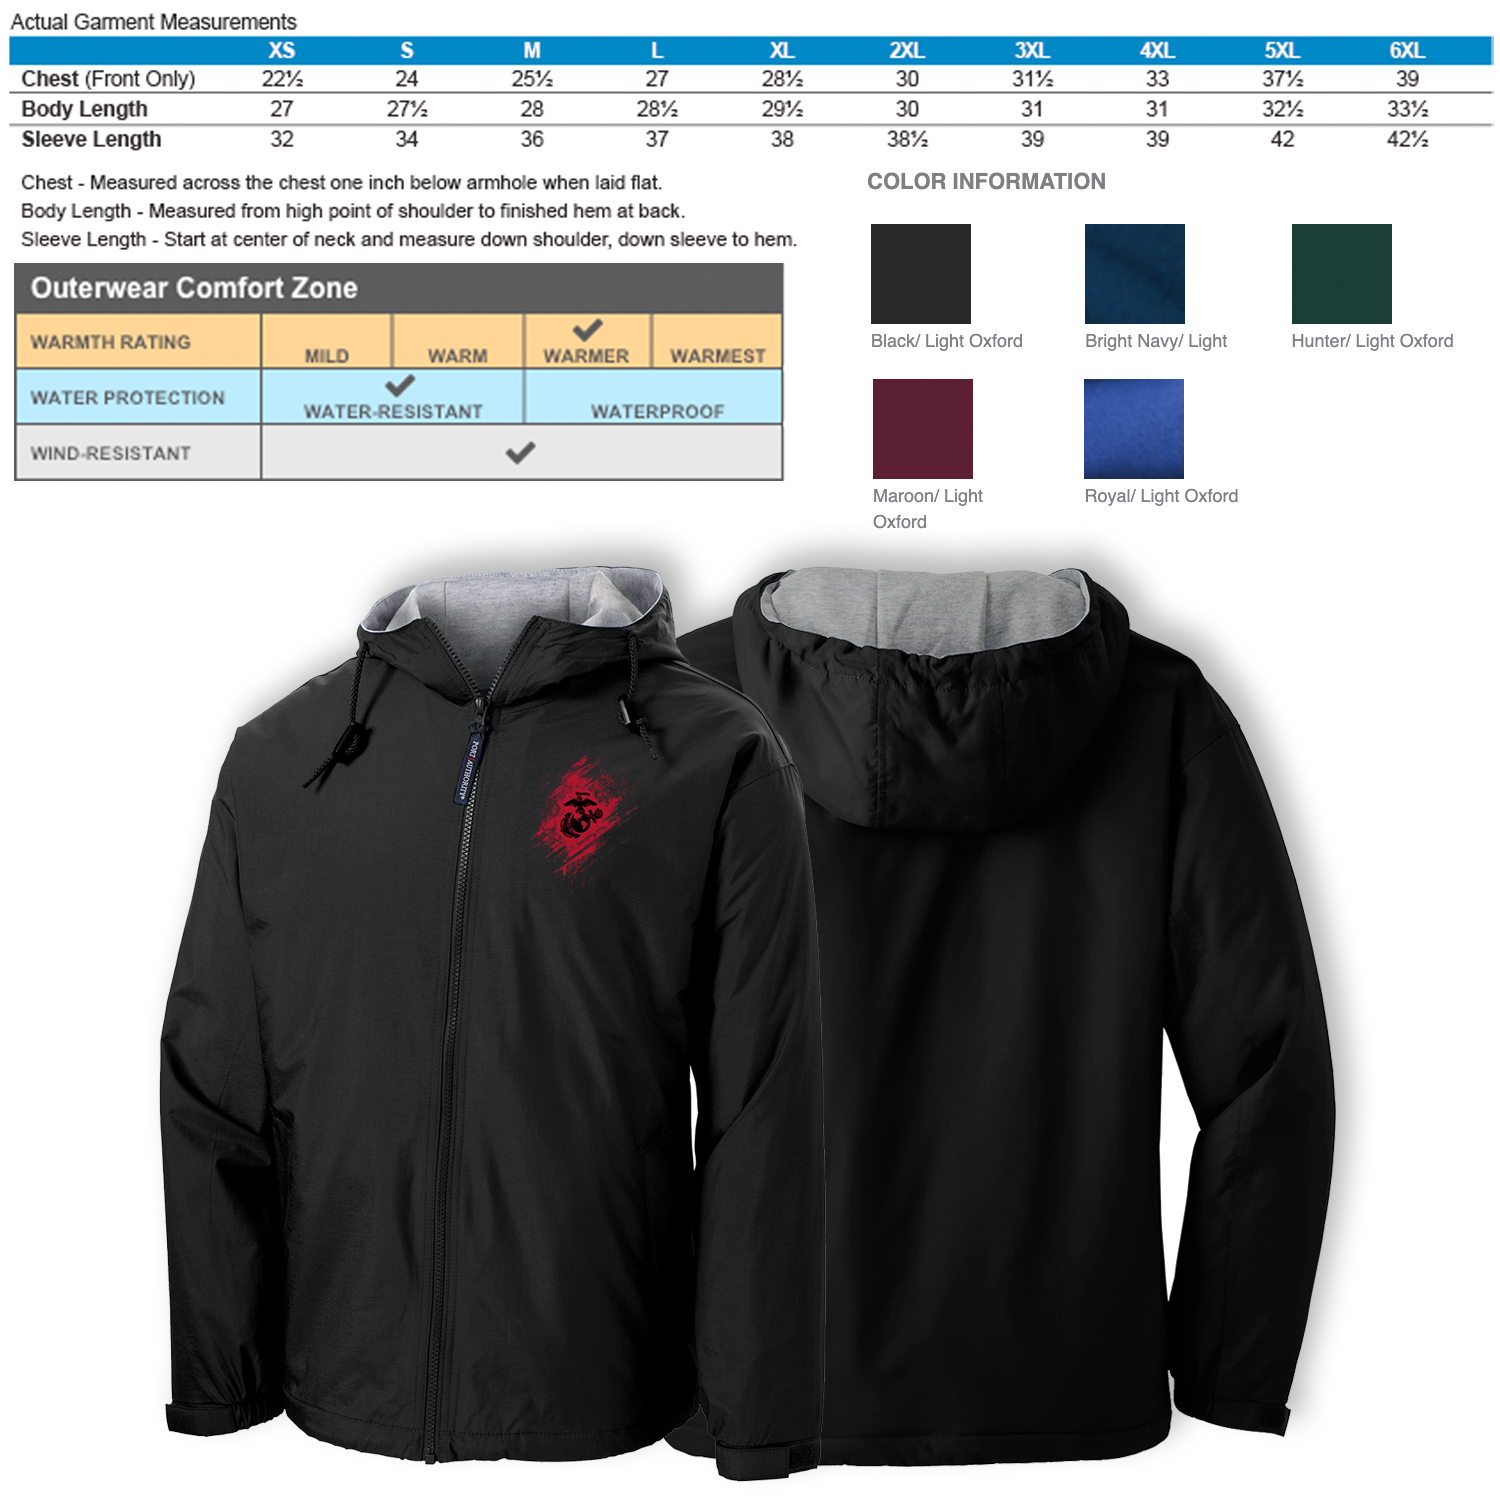 Custom US Marine Corps Ranks/Insignia In Heart Print On Left Chest Team Jacket